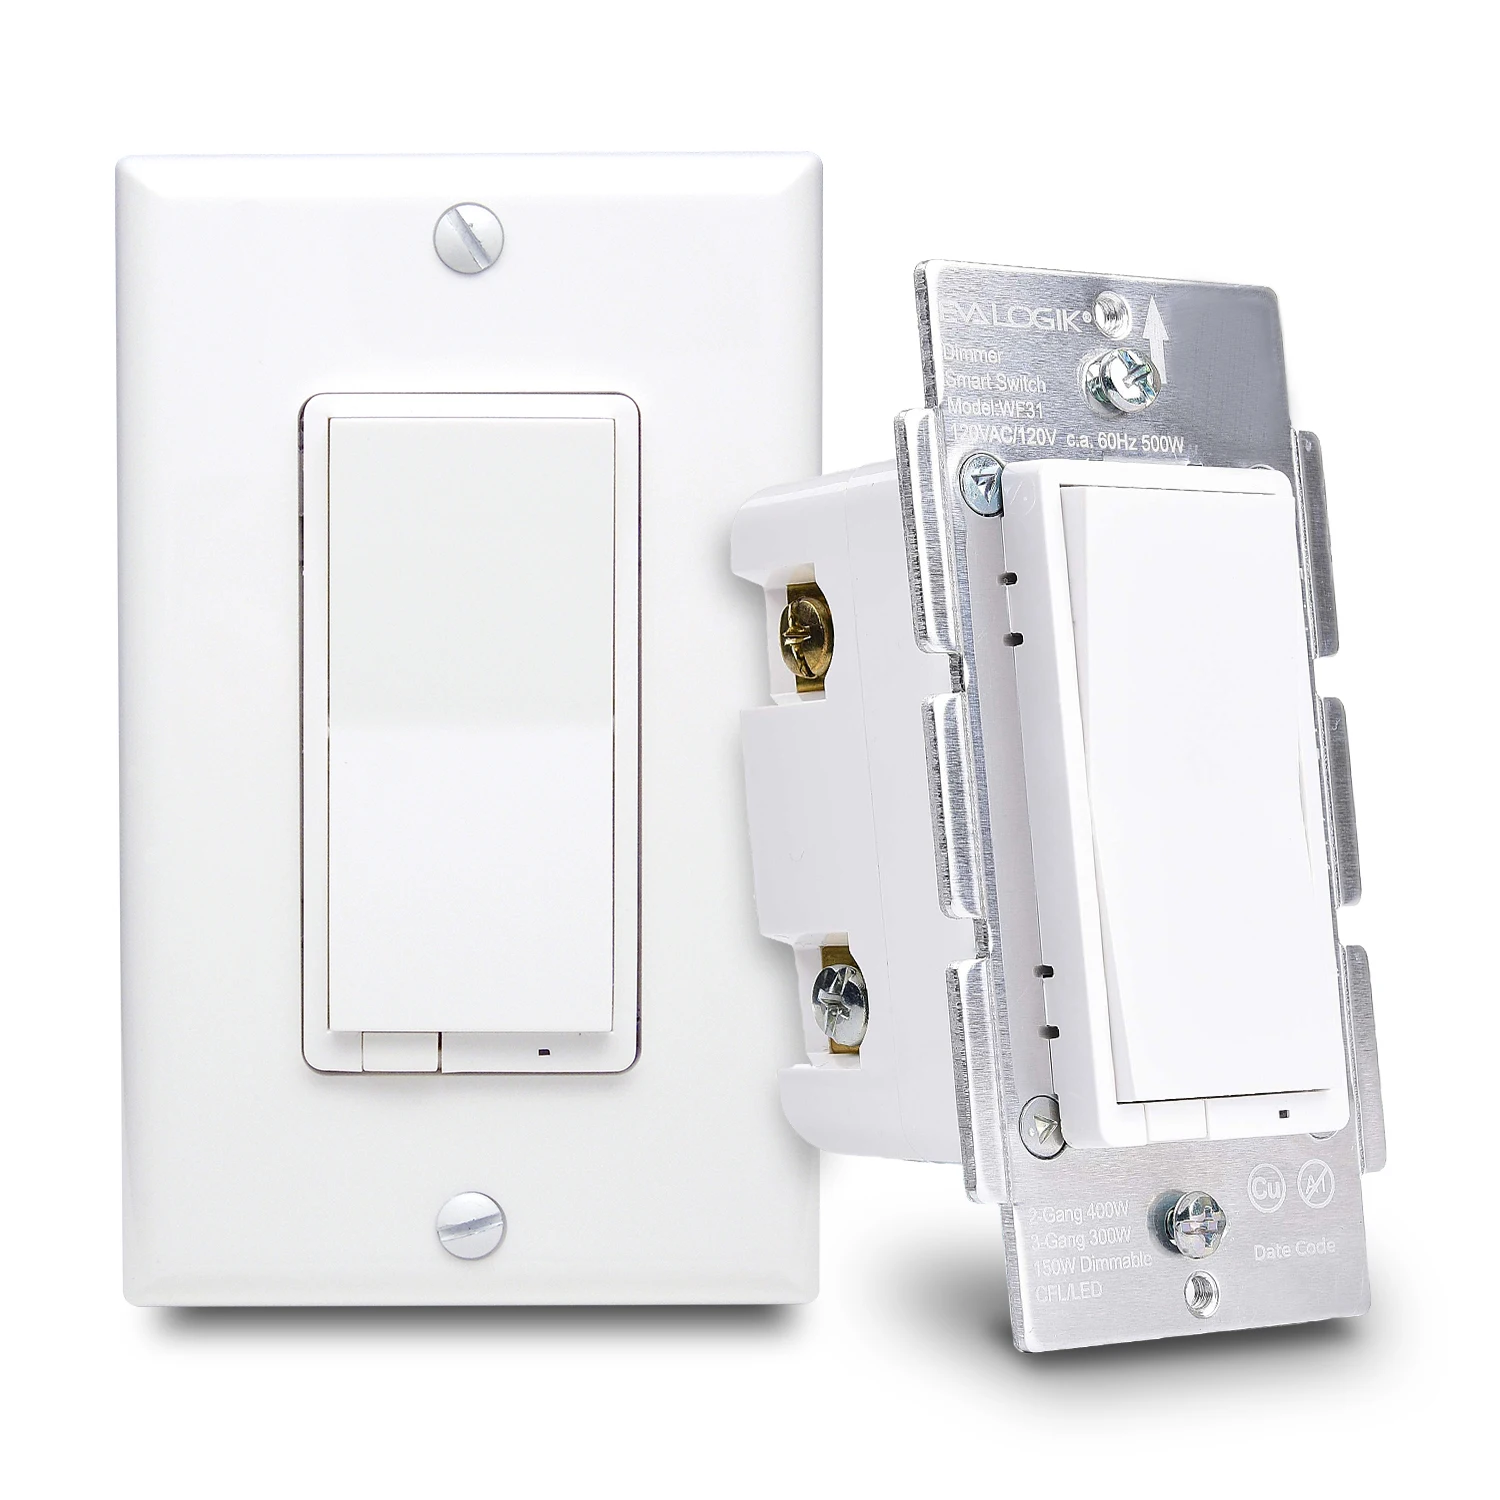 EVALOGIK Wireless kinetic switch usa  standard wifi wall switch for led lighting